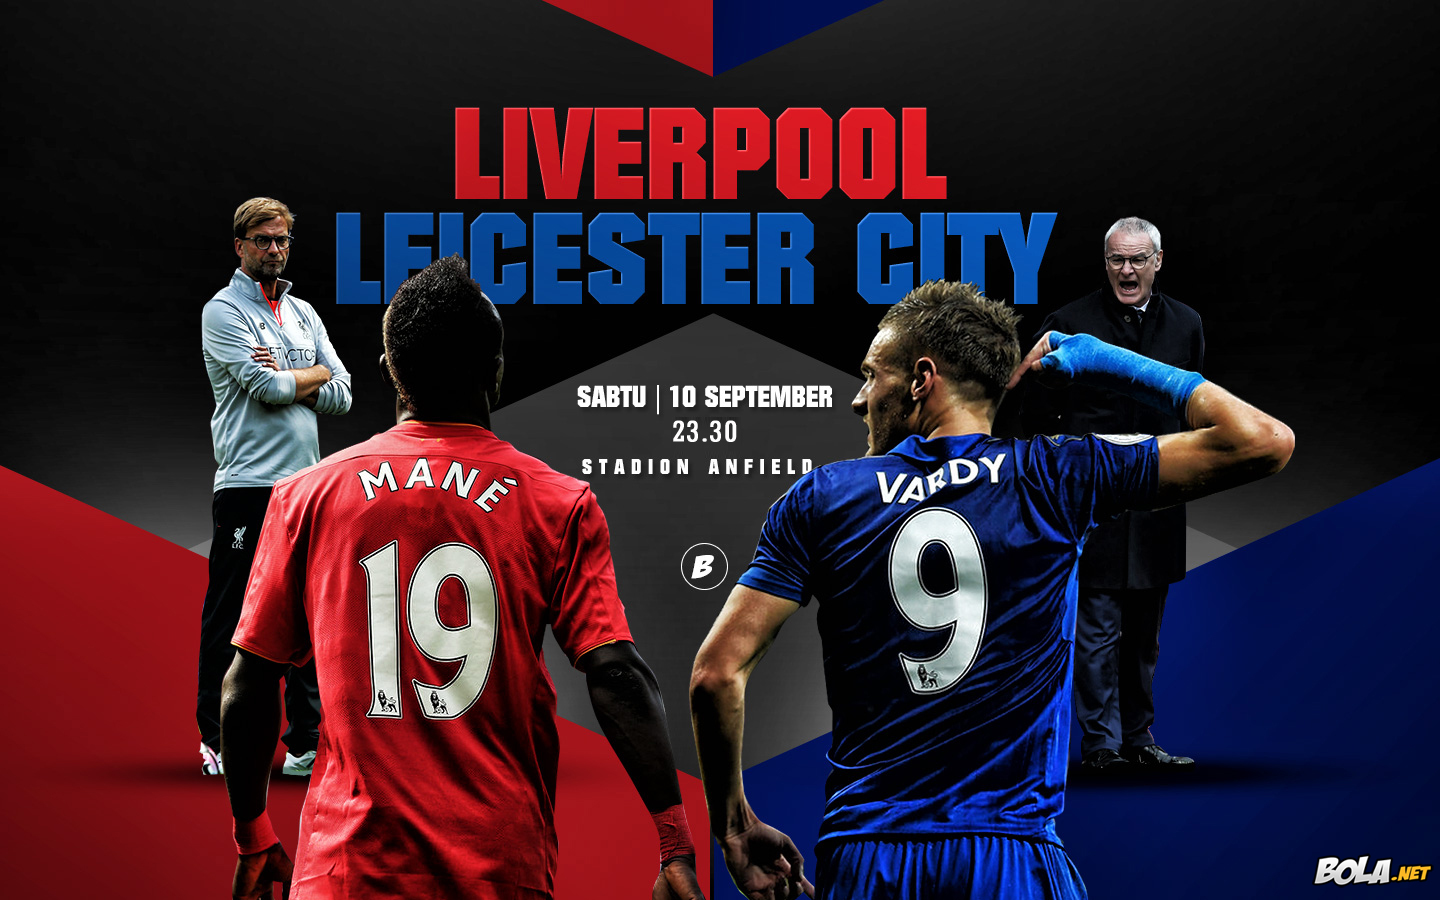 Deskripsi : Wallpaper Liverpool Vs Leicester City, size: 1440x900